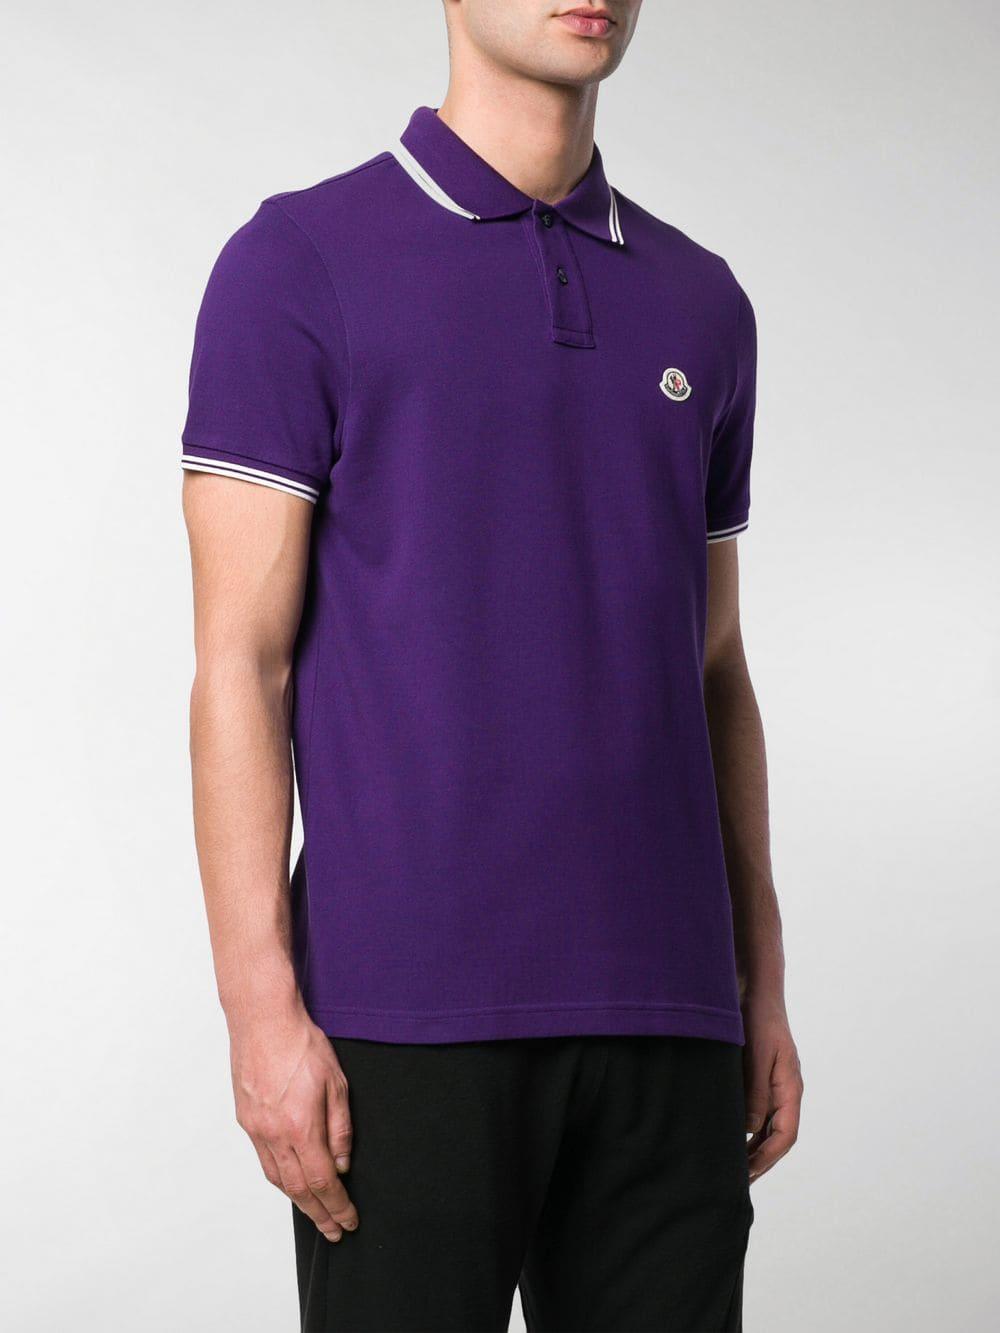 Moncler Cotton Striped Trim Polo Shirt in Purple for Men - Lyst